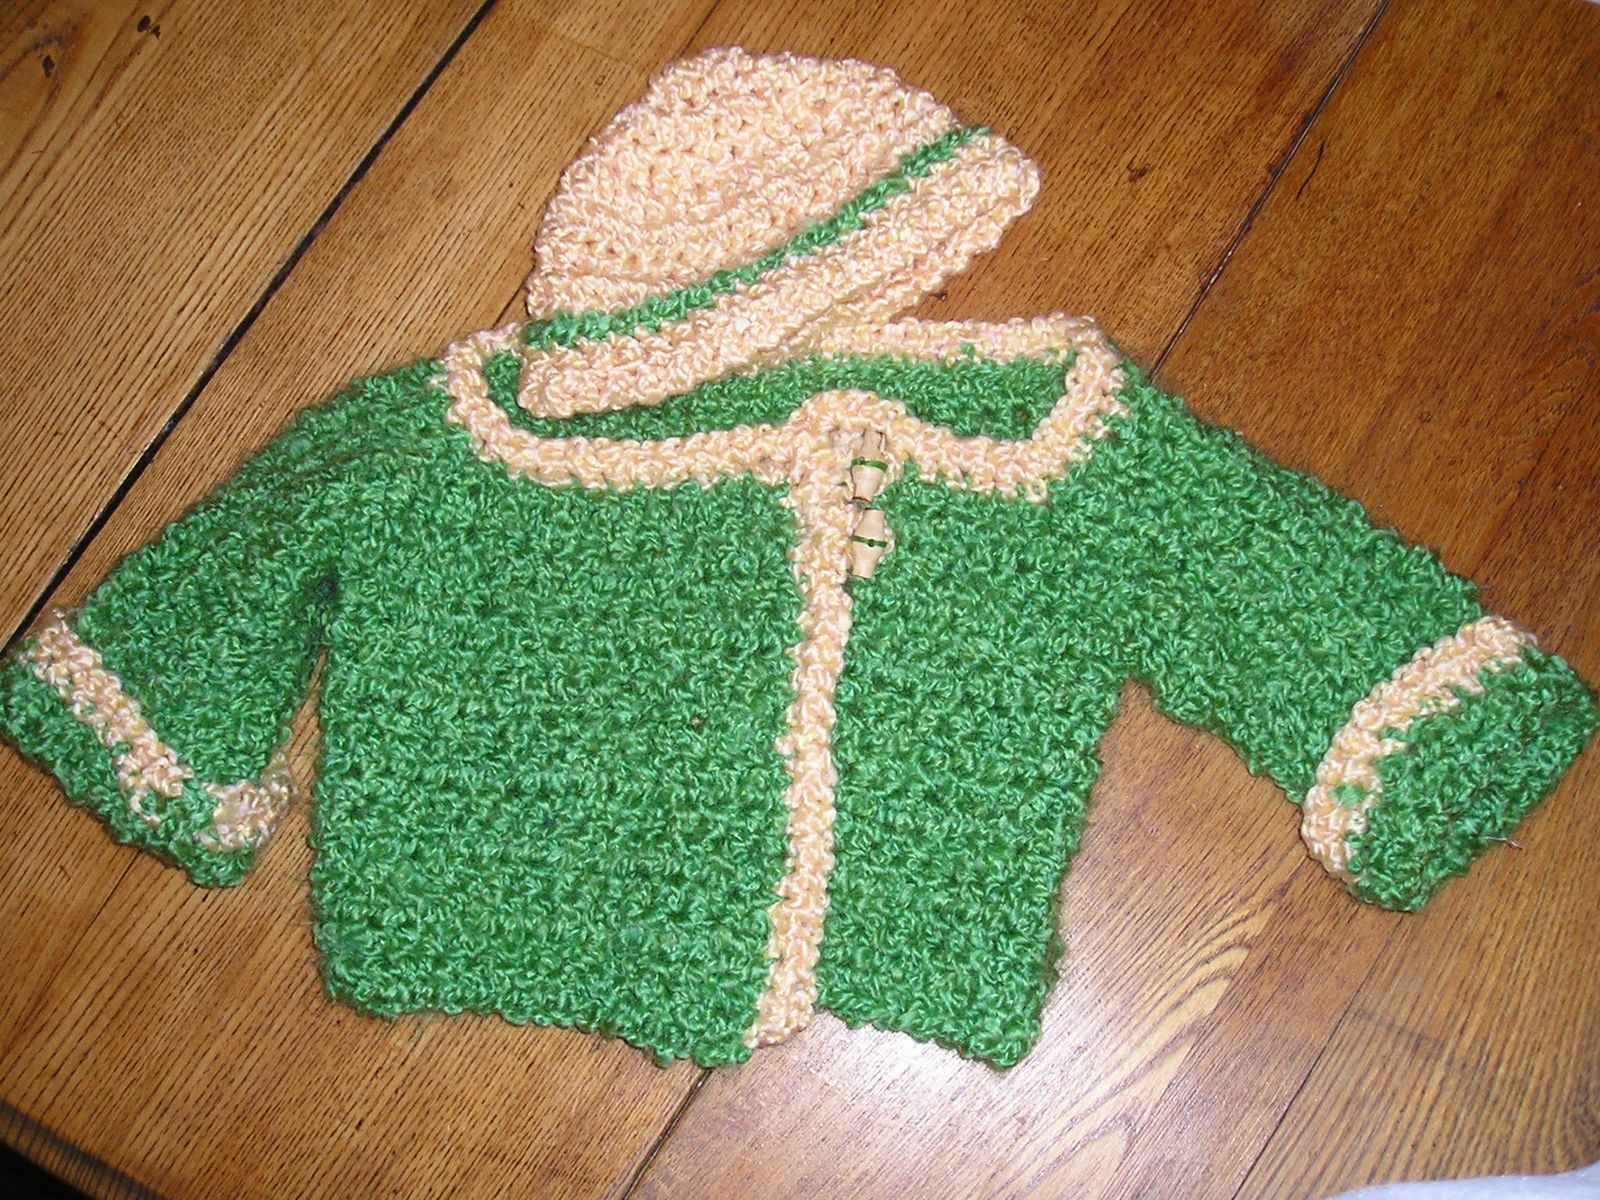 [green+sweater.jpg]